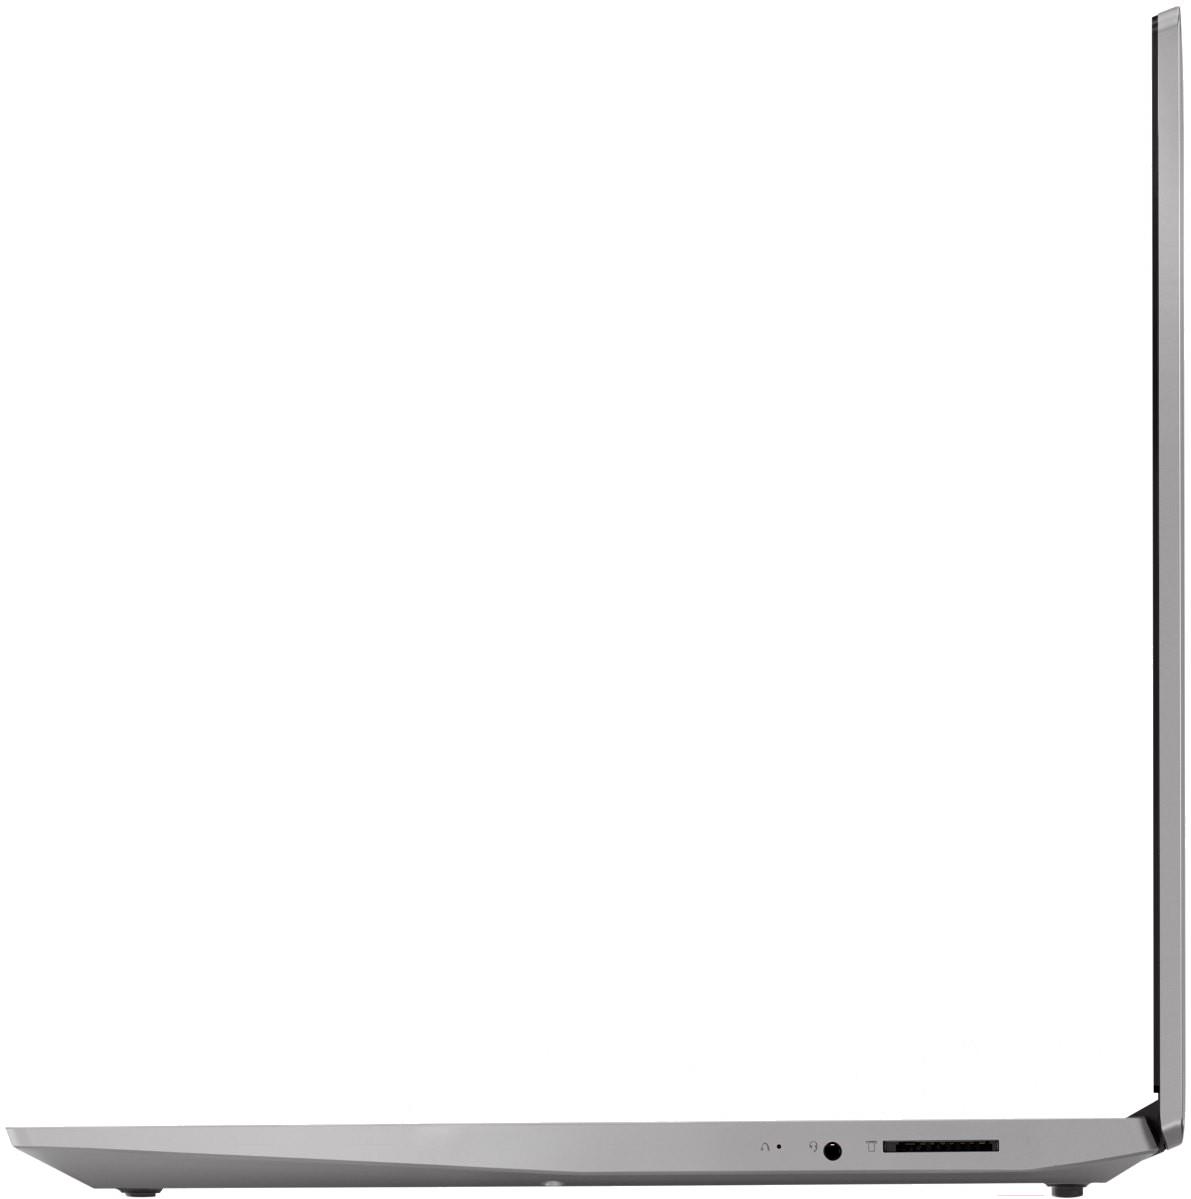 Ноутбук Lenovo Ideapad S145 15iwl Цена